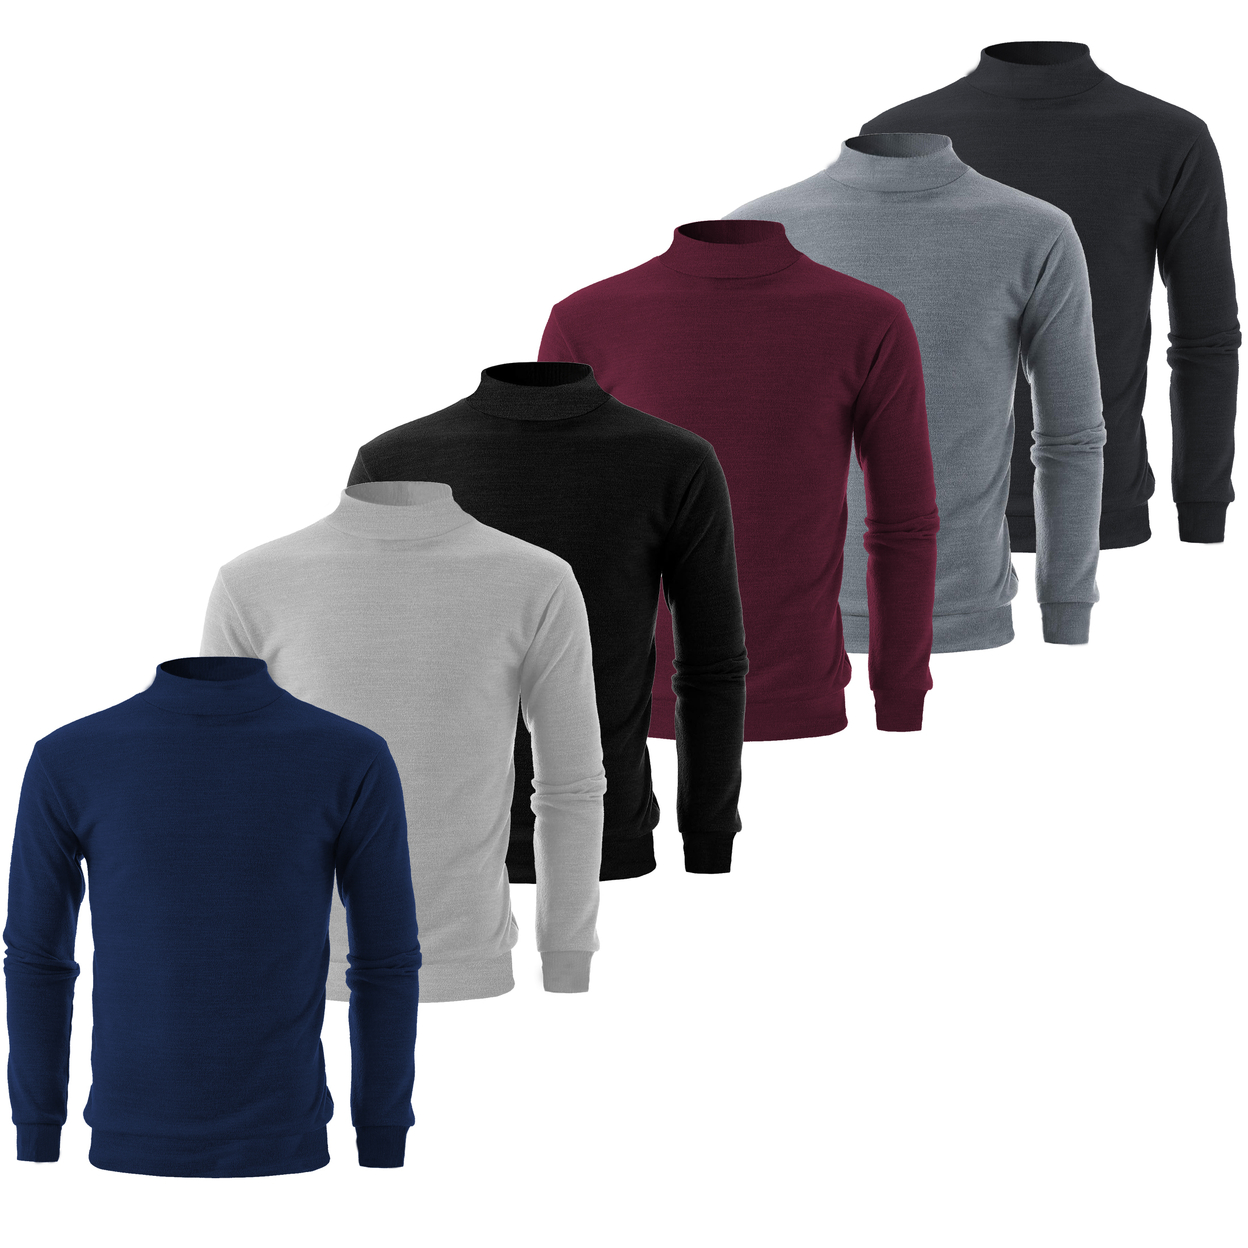 Multi-Pack: Men's Winter Warm Cozy Knit Slim Fit Mock Neck Sweater - 2-pack, X-large